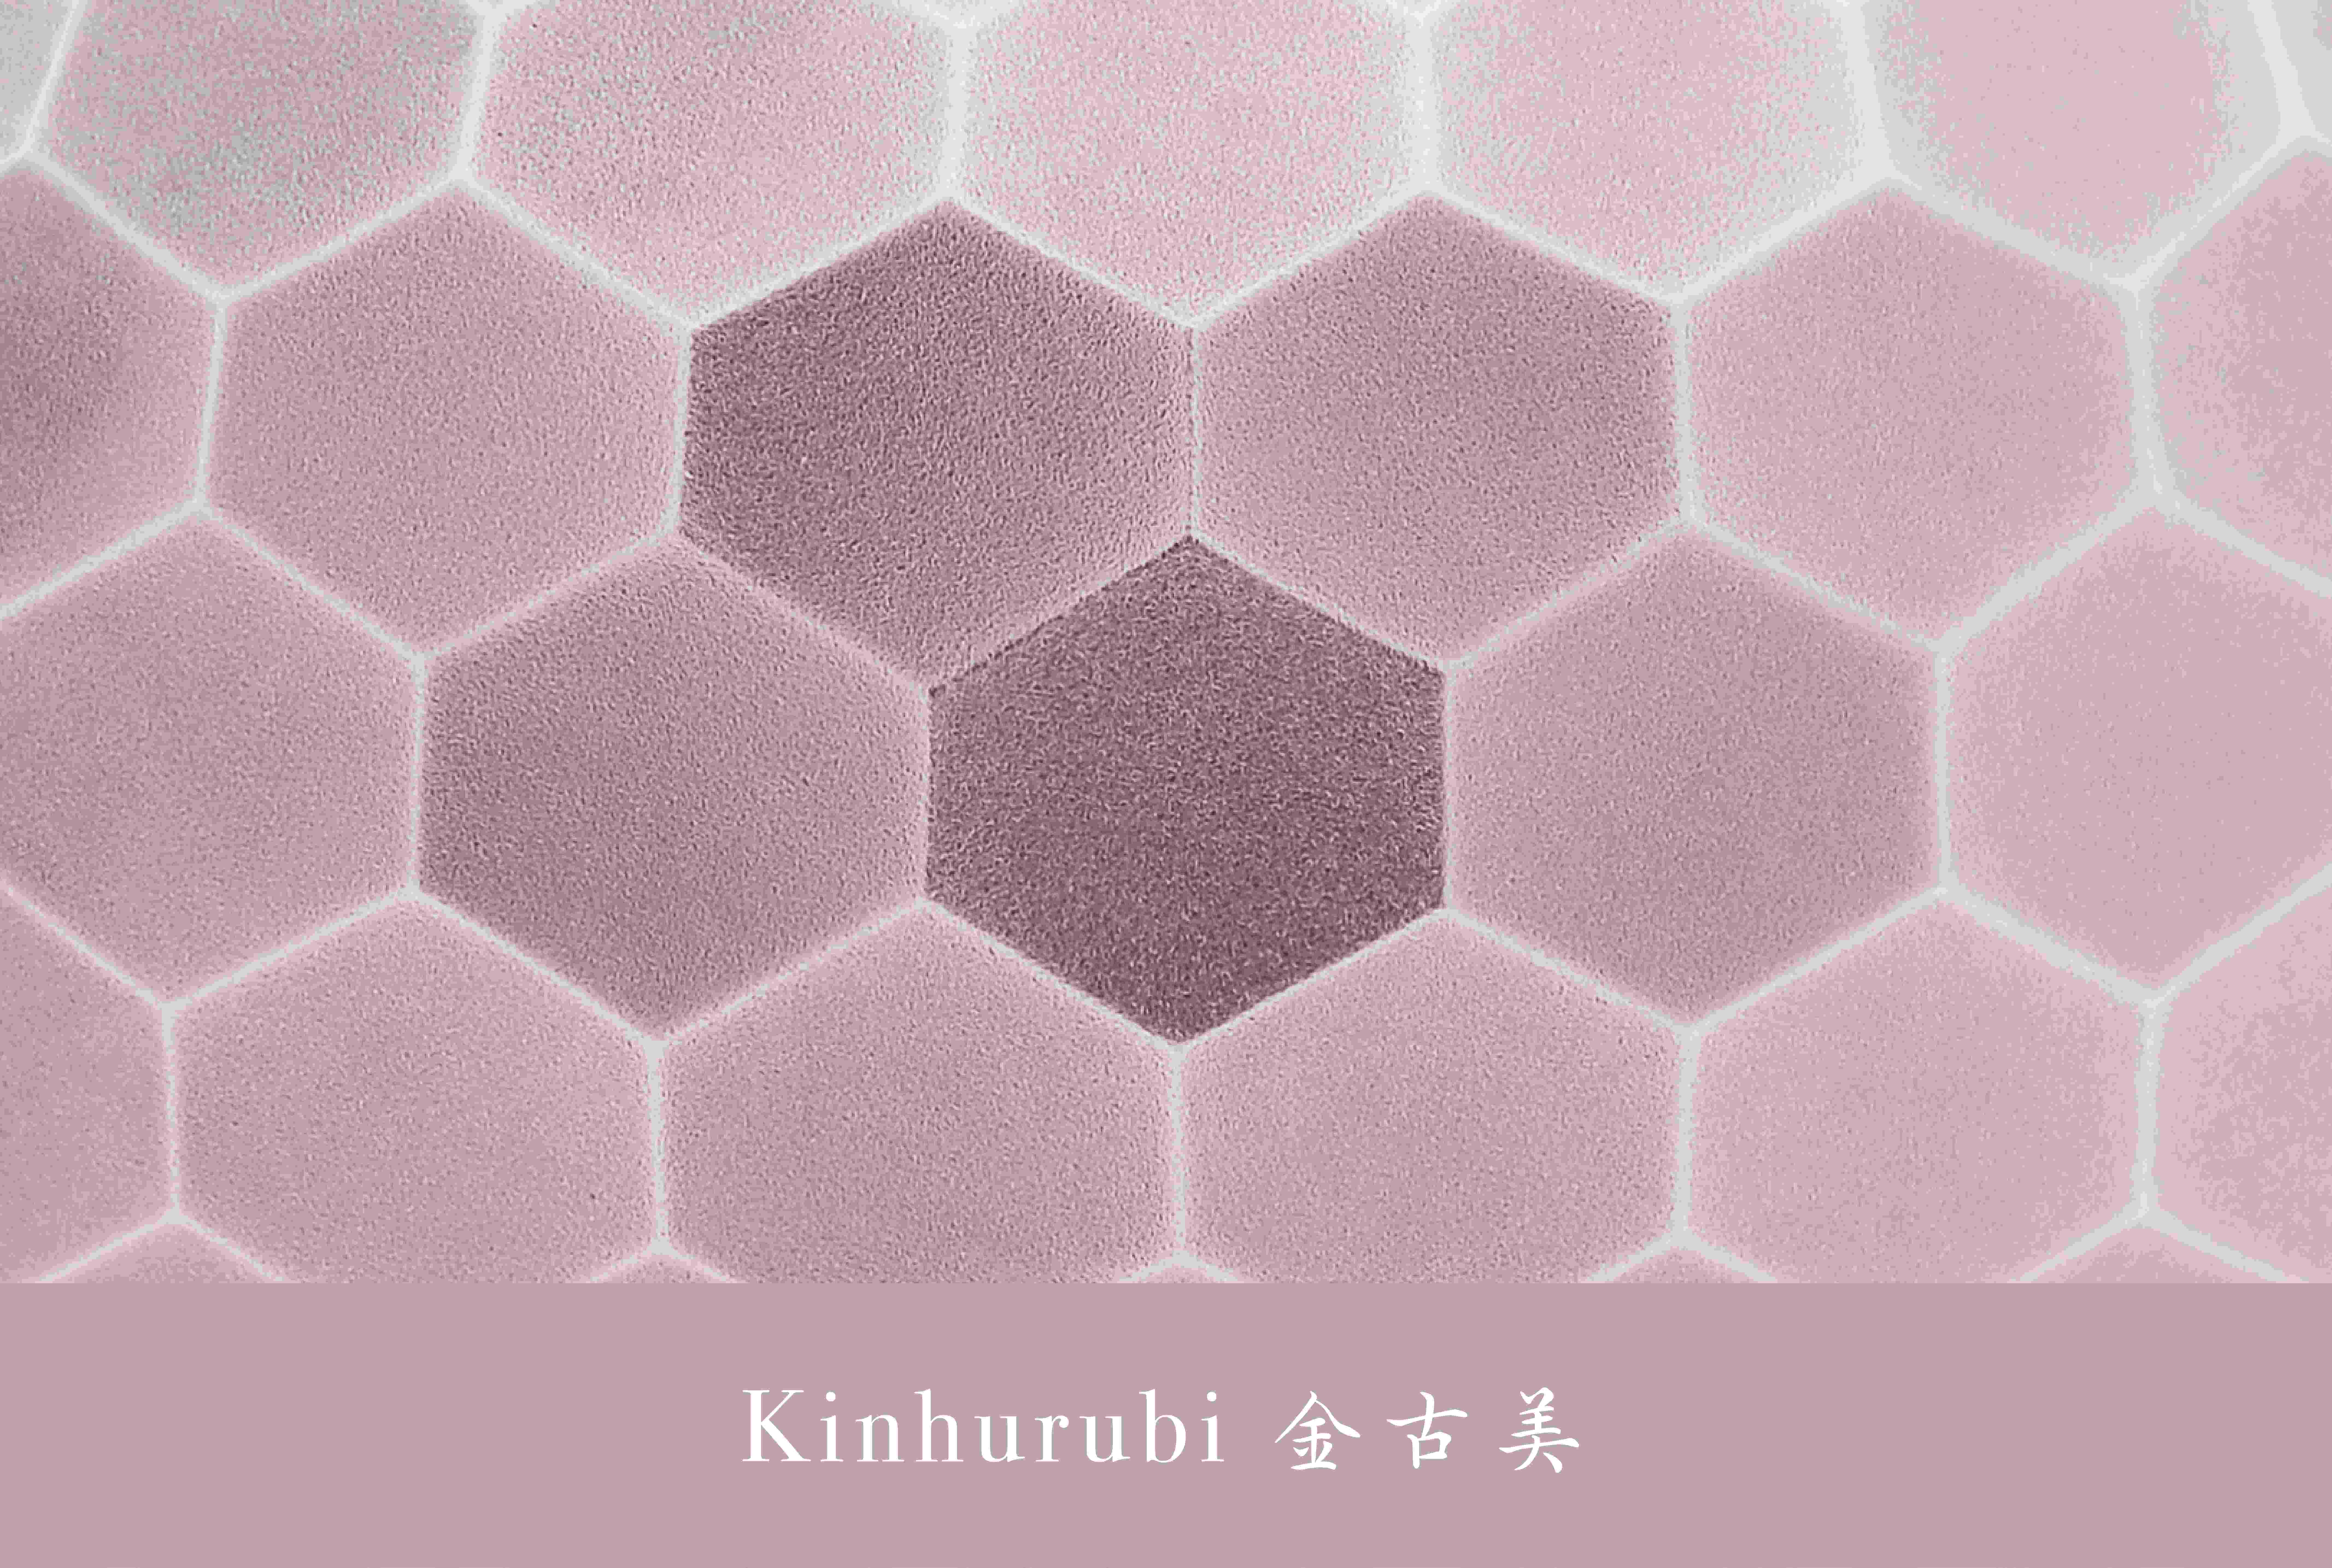 with title Kinhurubi 01 R